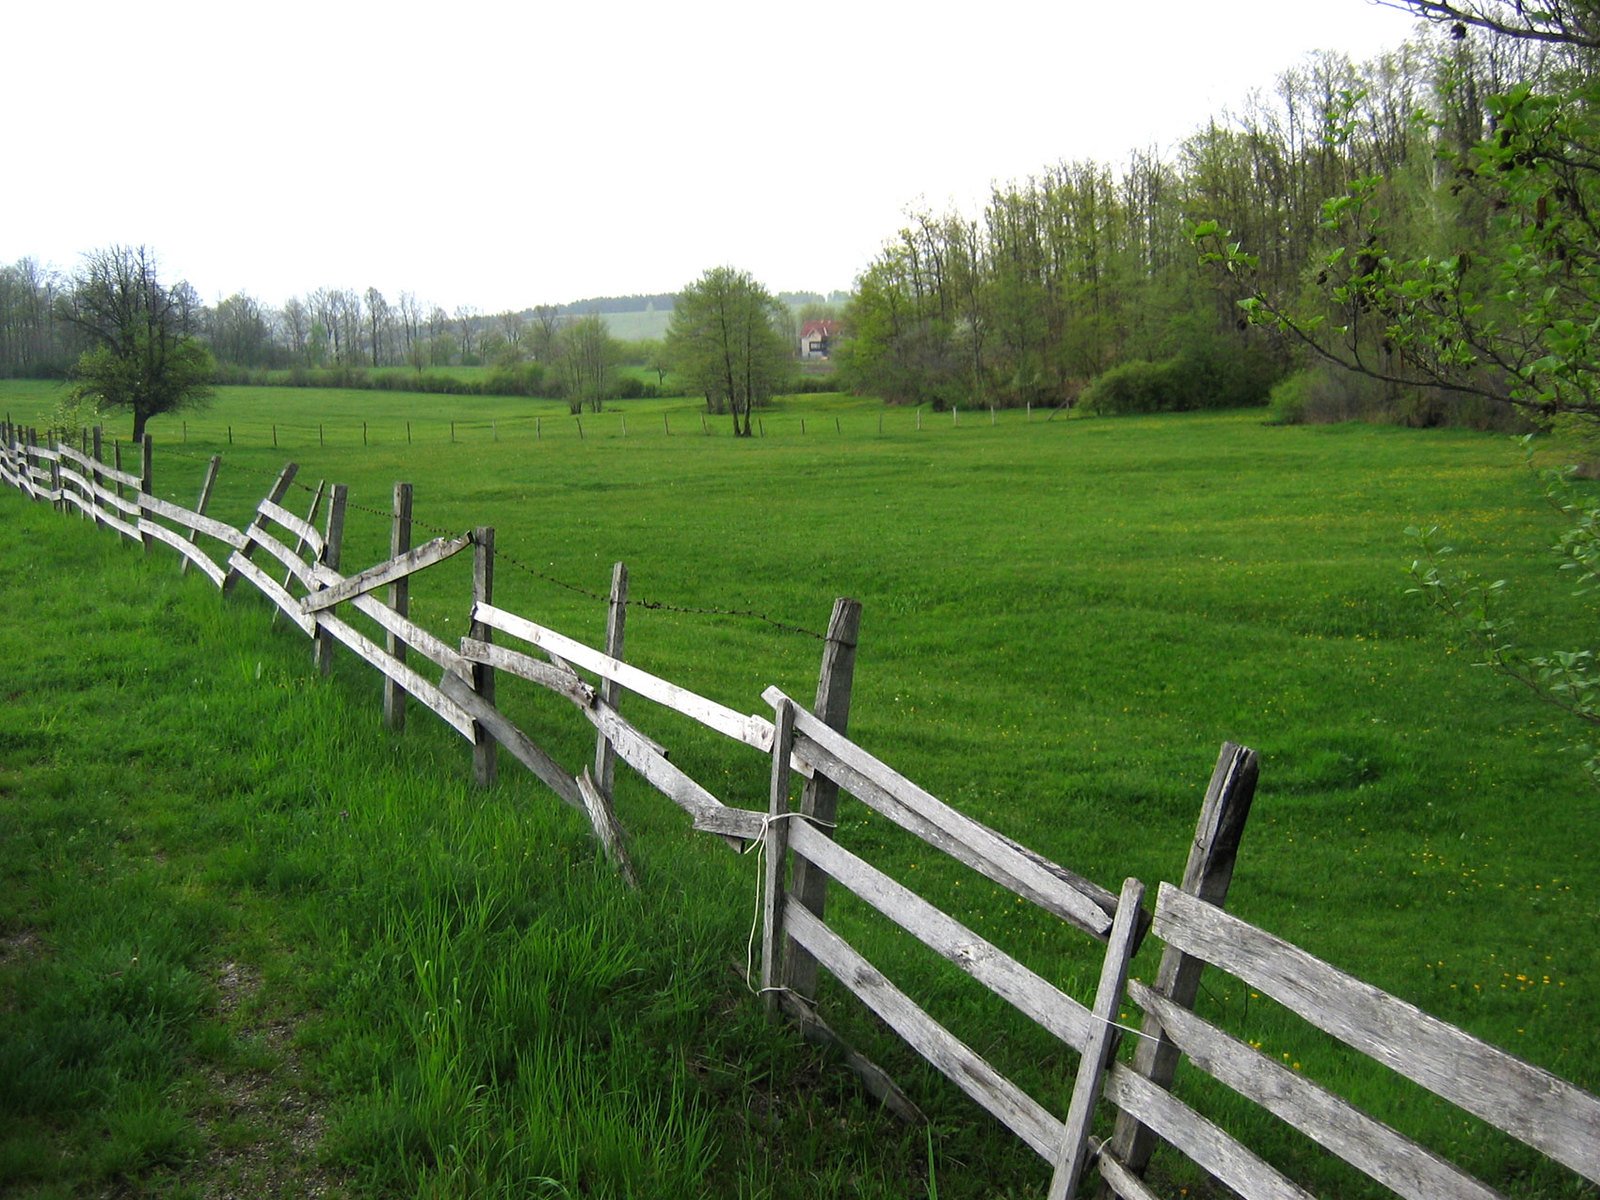 a row of split rail farm fences on a grassy field